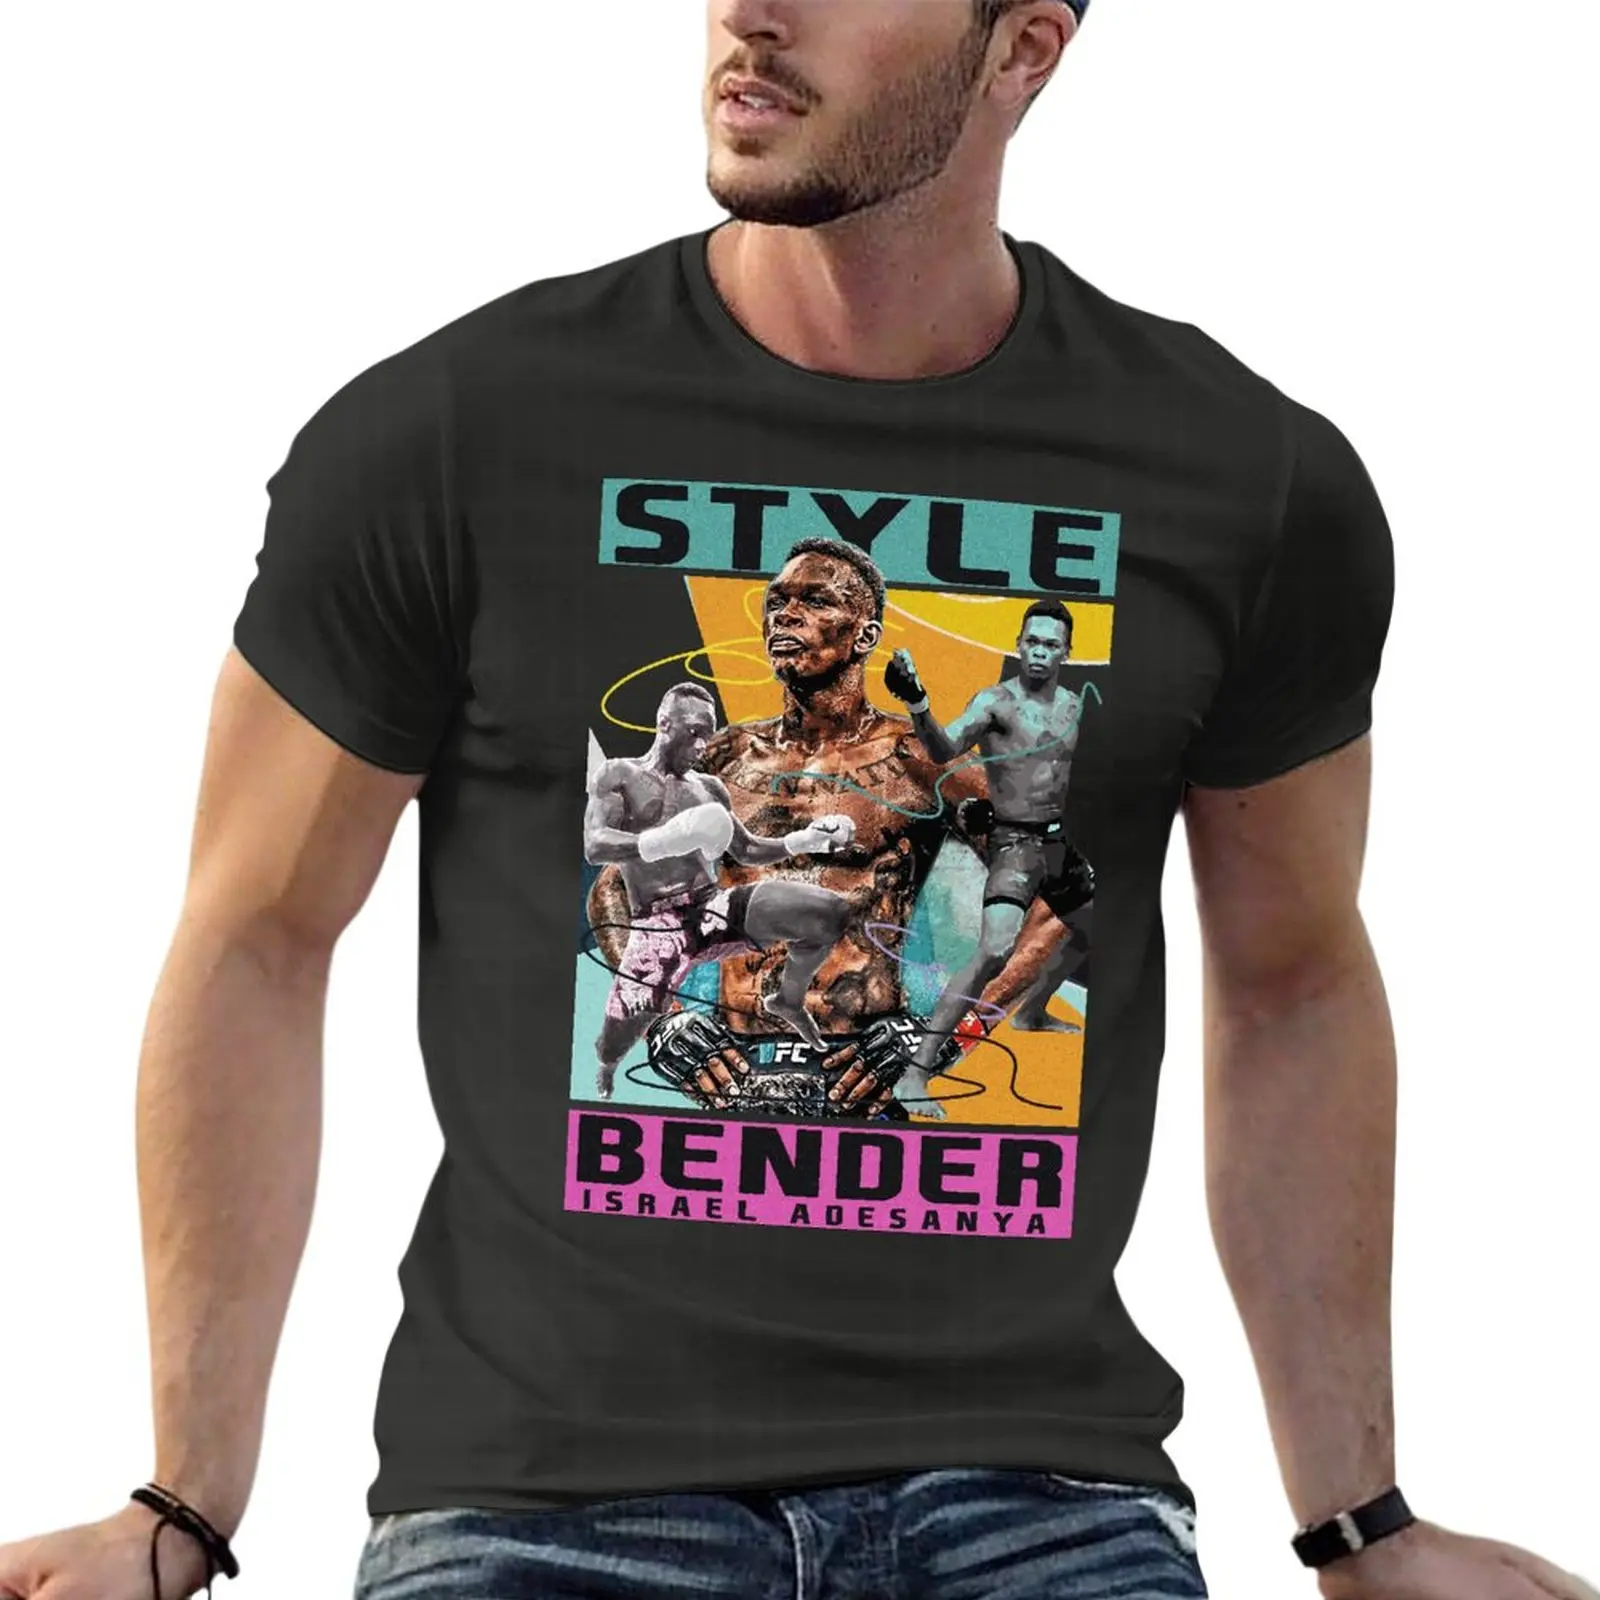 

Israel Adsanya - The Style Bender Style Oversize Tshirt Brand Men Clothes Short Sleeve Streetwear Plus Size Top Tee